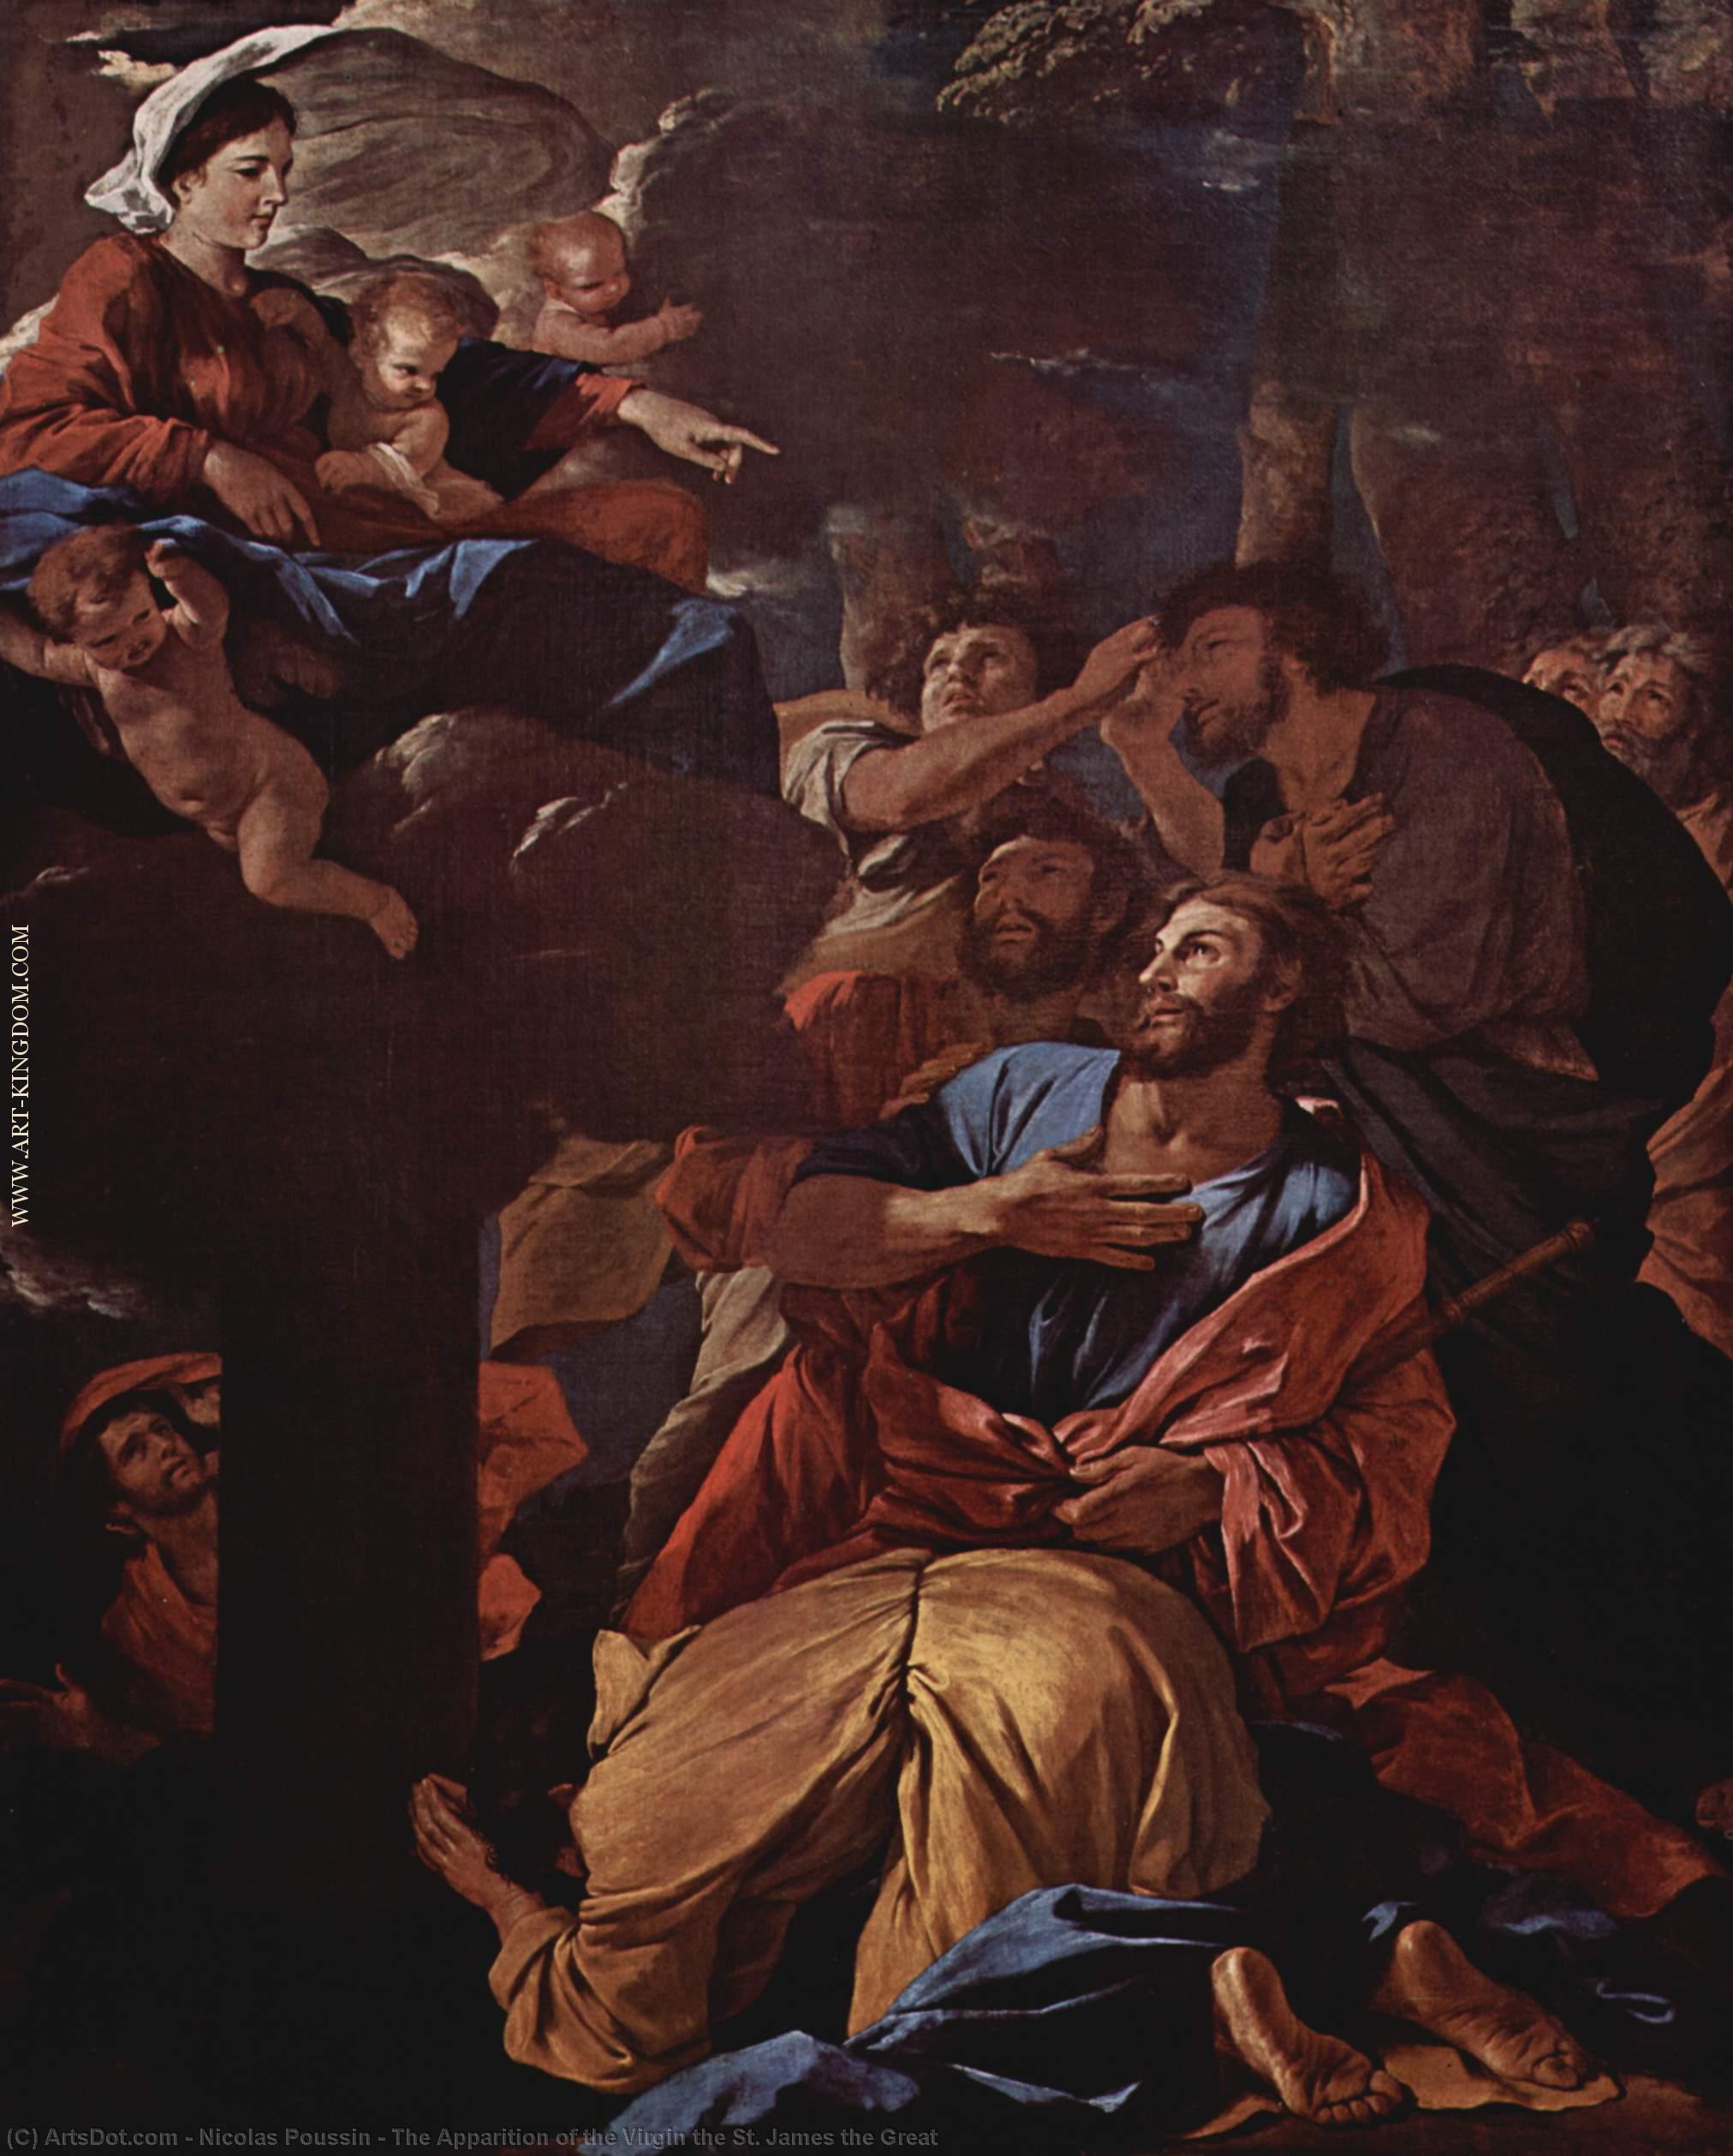 WikiOO.org - دایره المعارف هنرهای زیبا - نقاشی، آثار هنری Nicolas Poussin - The Apparition of the Virgin the St. James the Great